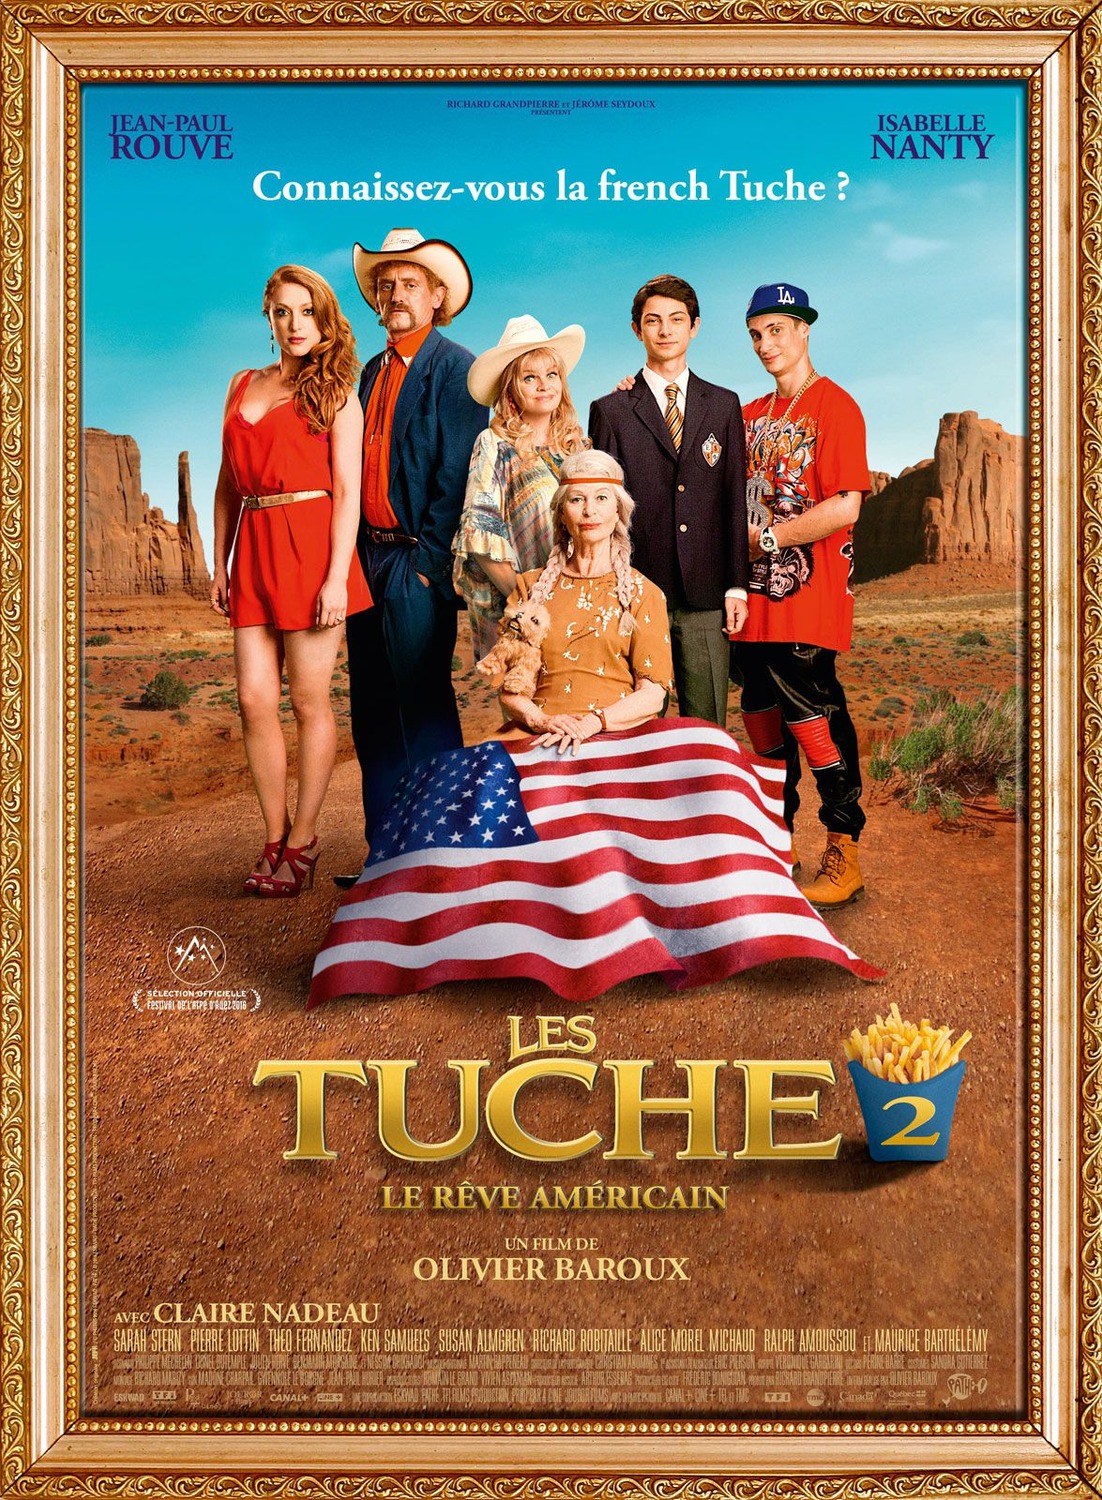 Extra Large Movie Poster Image for Les Tuche 2 - Le rêve américain 